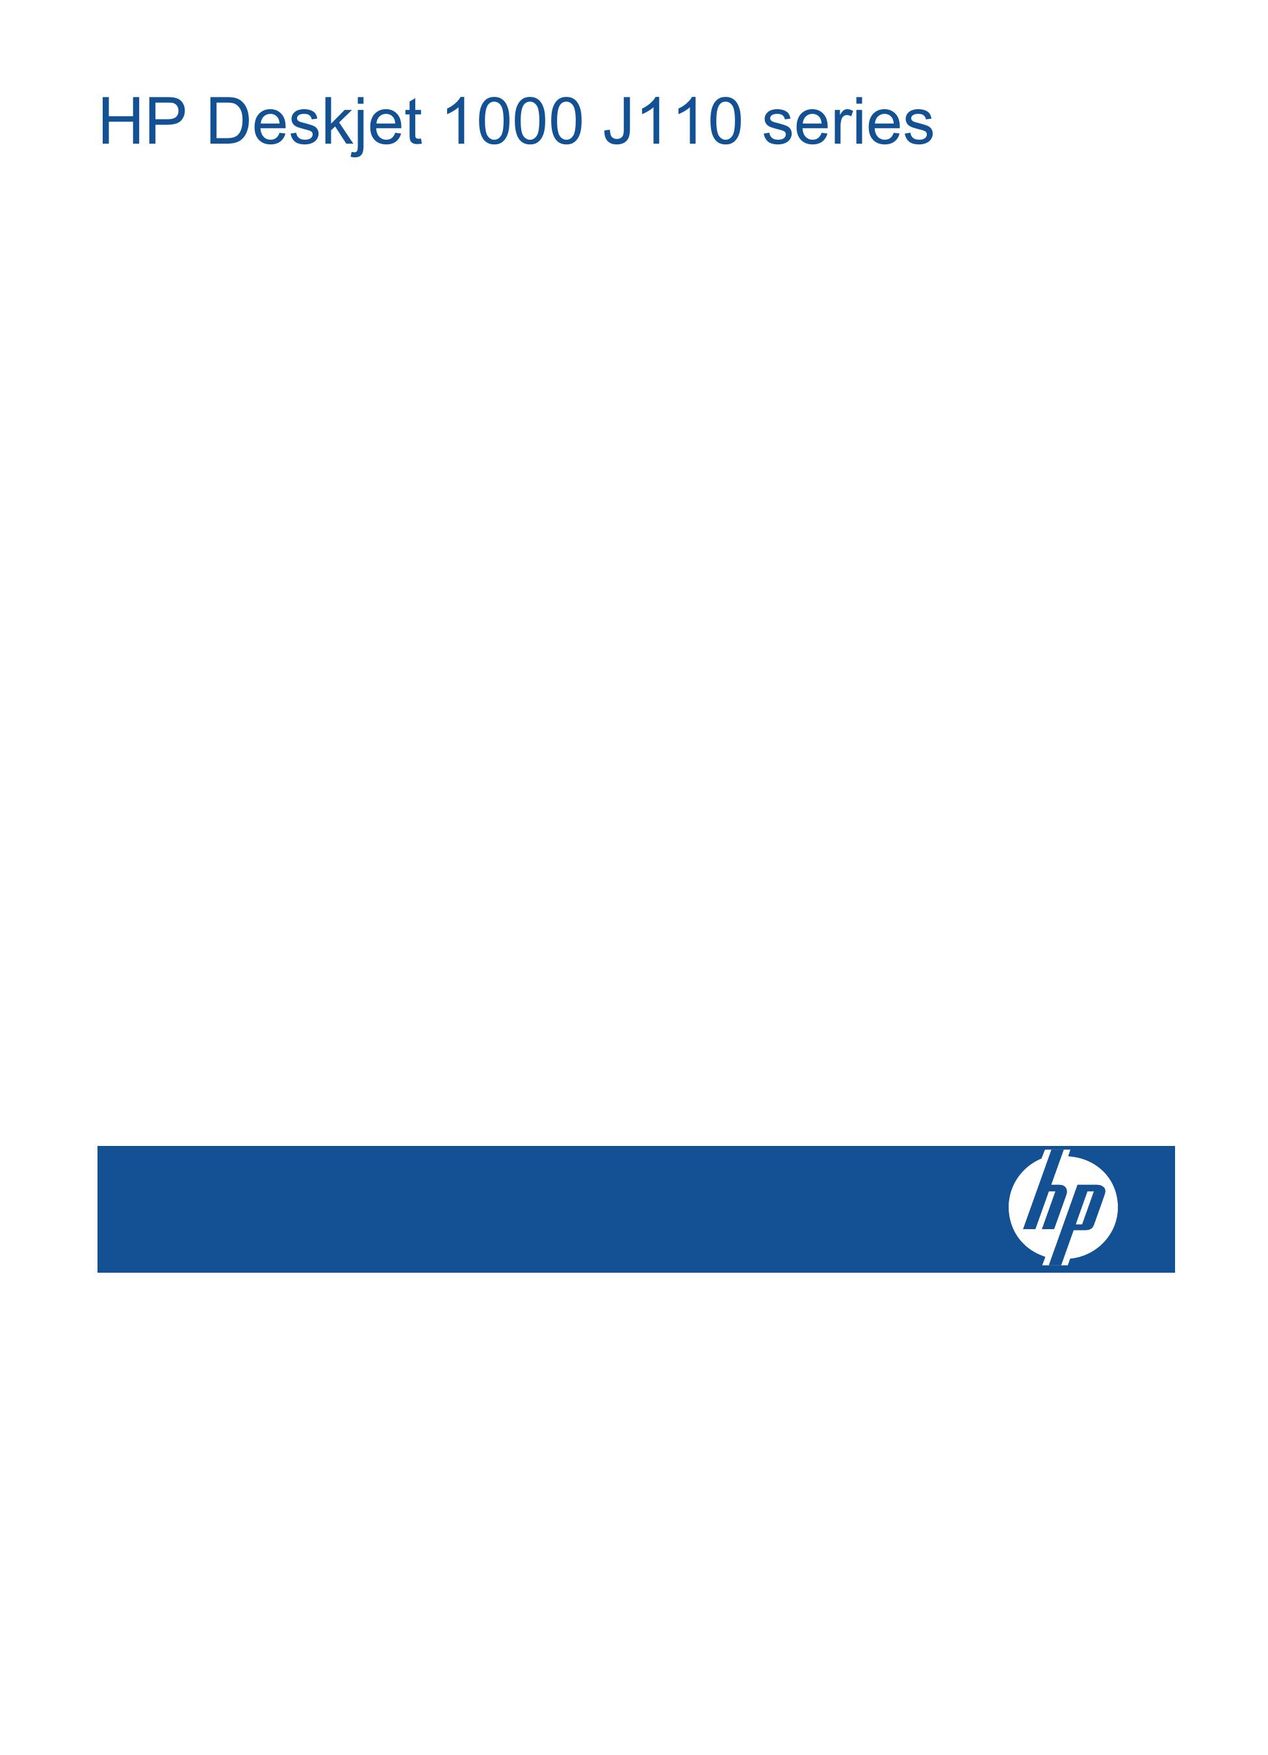 HP (Hewlett-Packard) 1000 J110 Printer User Manual